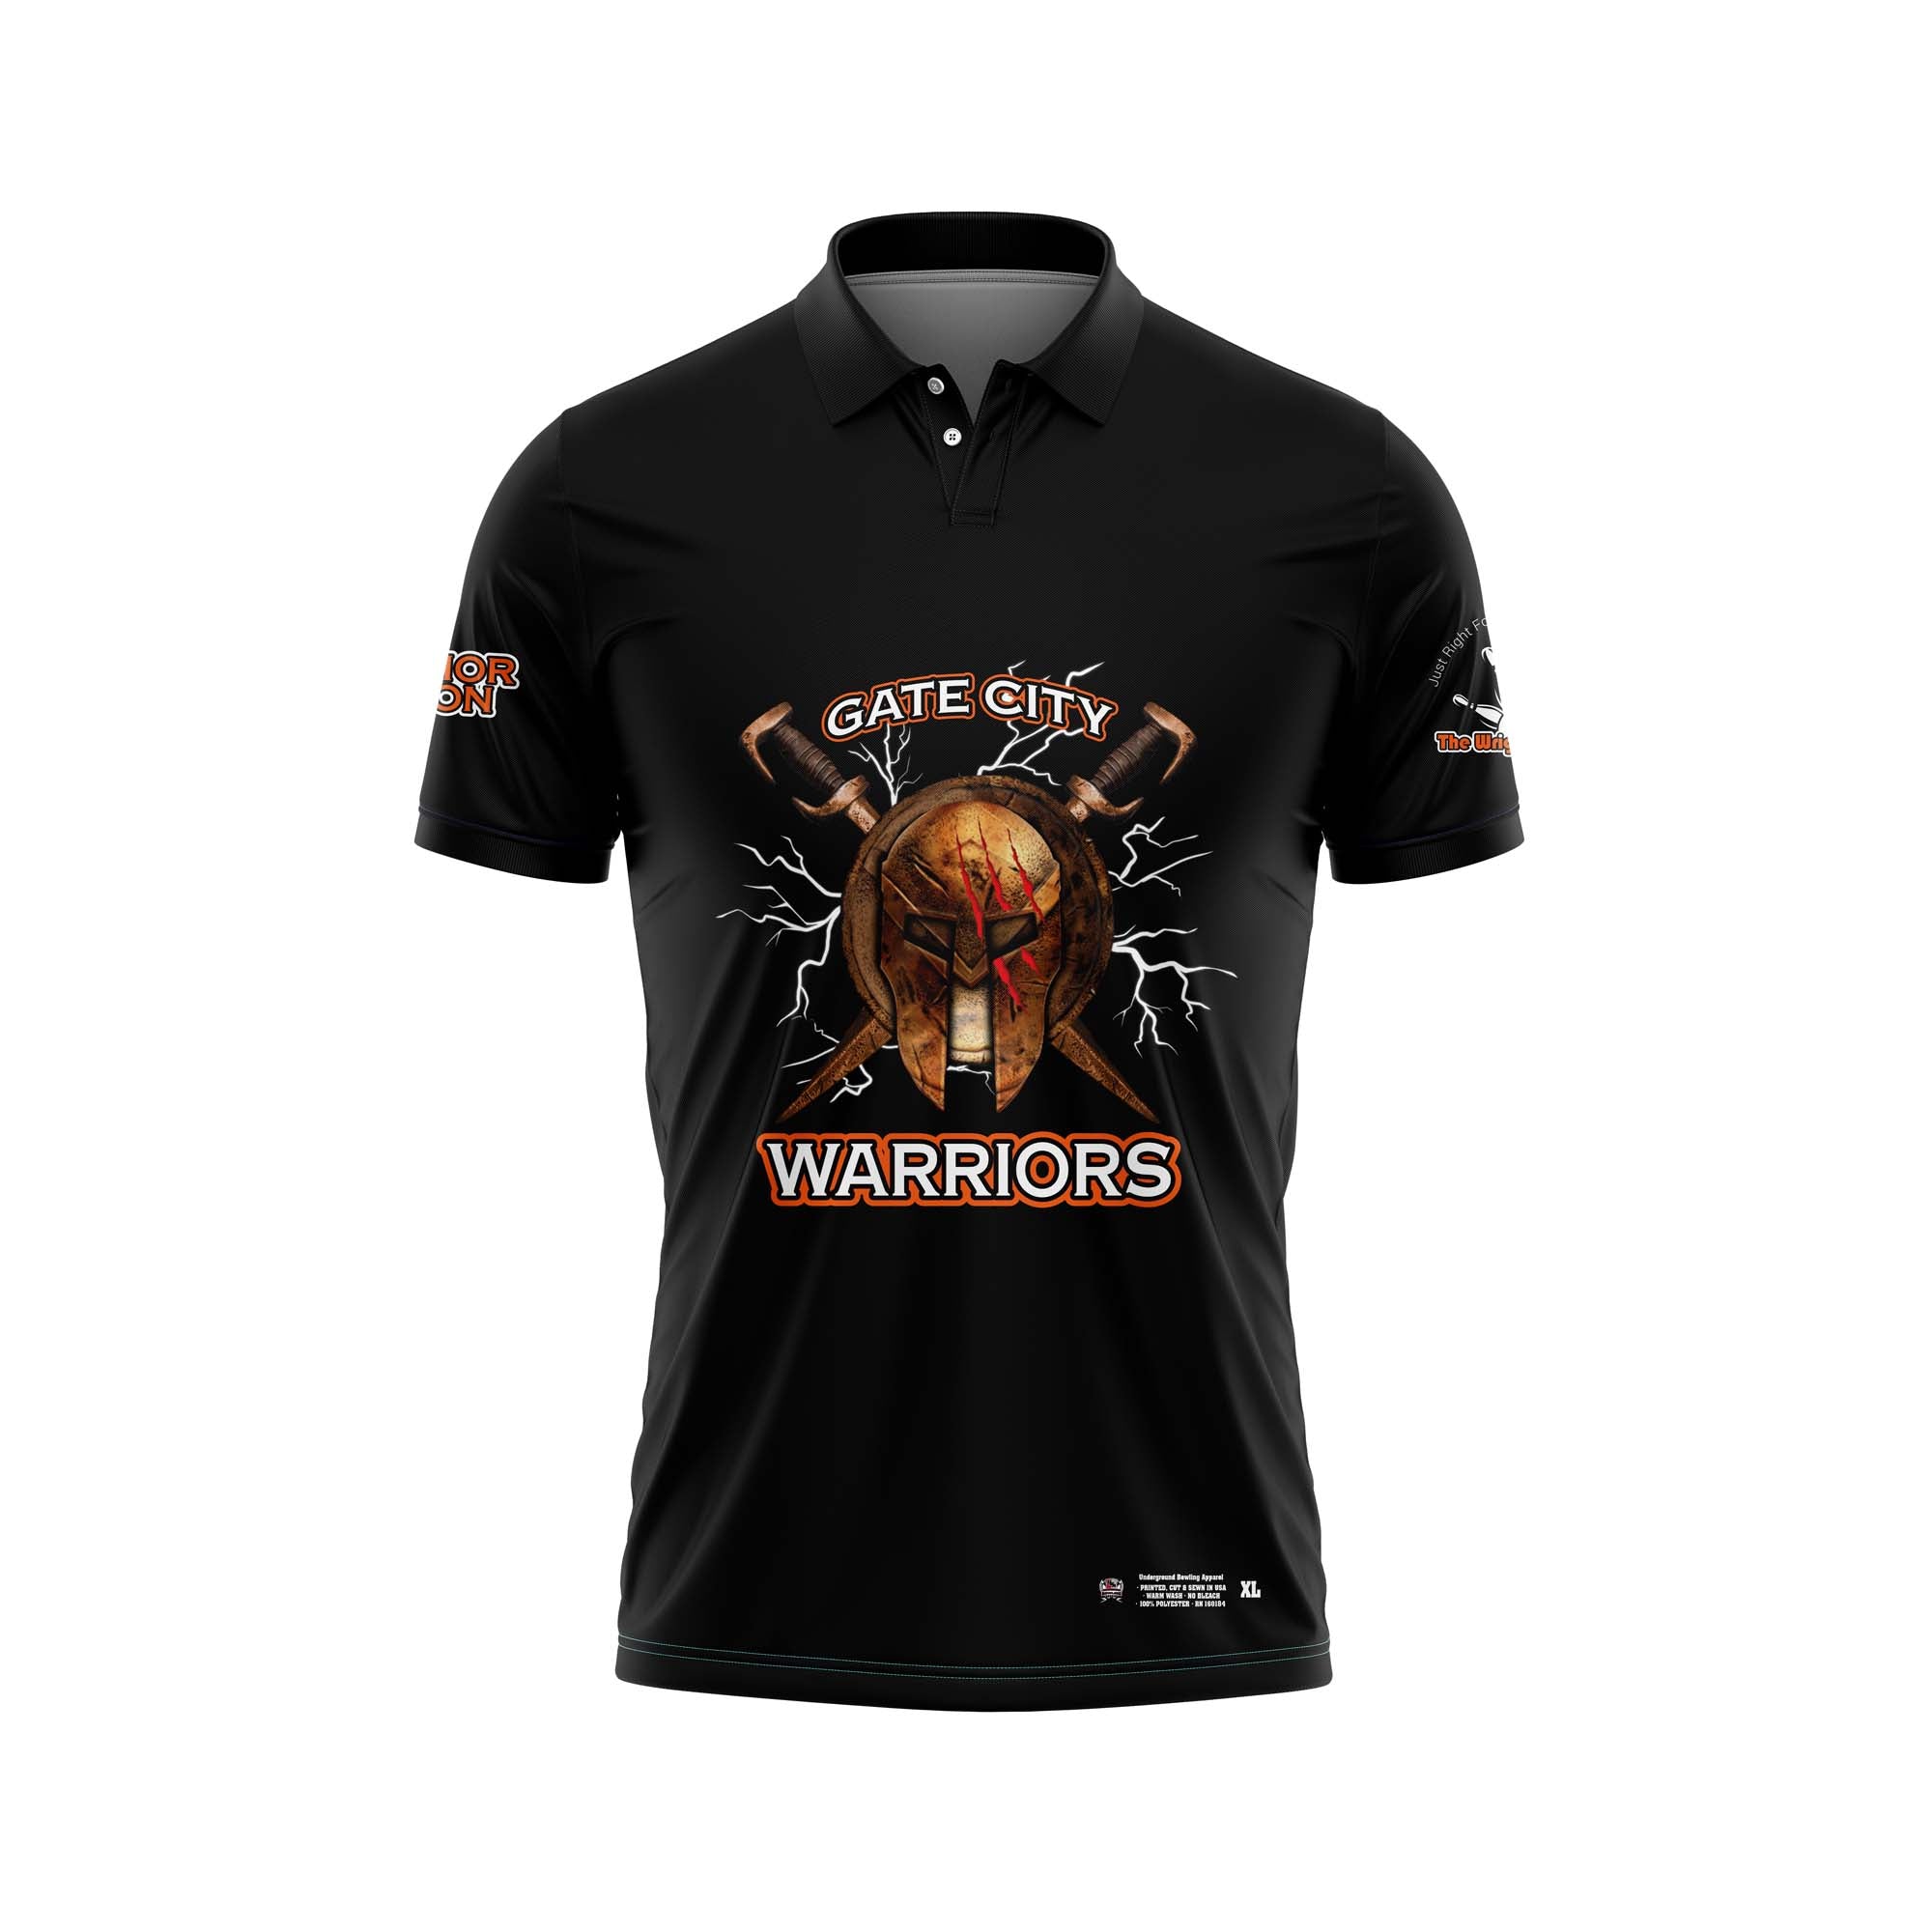 Gate City Warriors Black Jersey